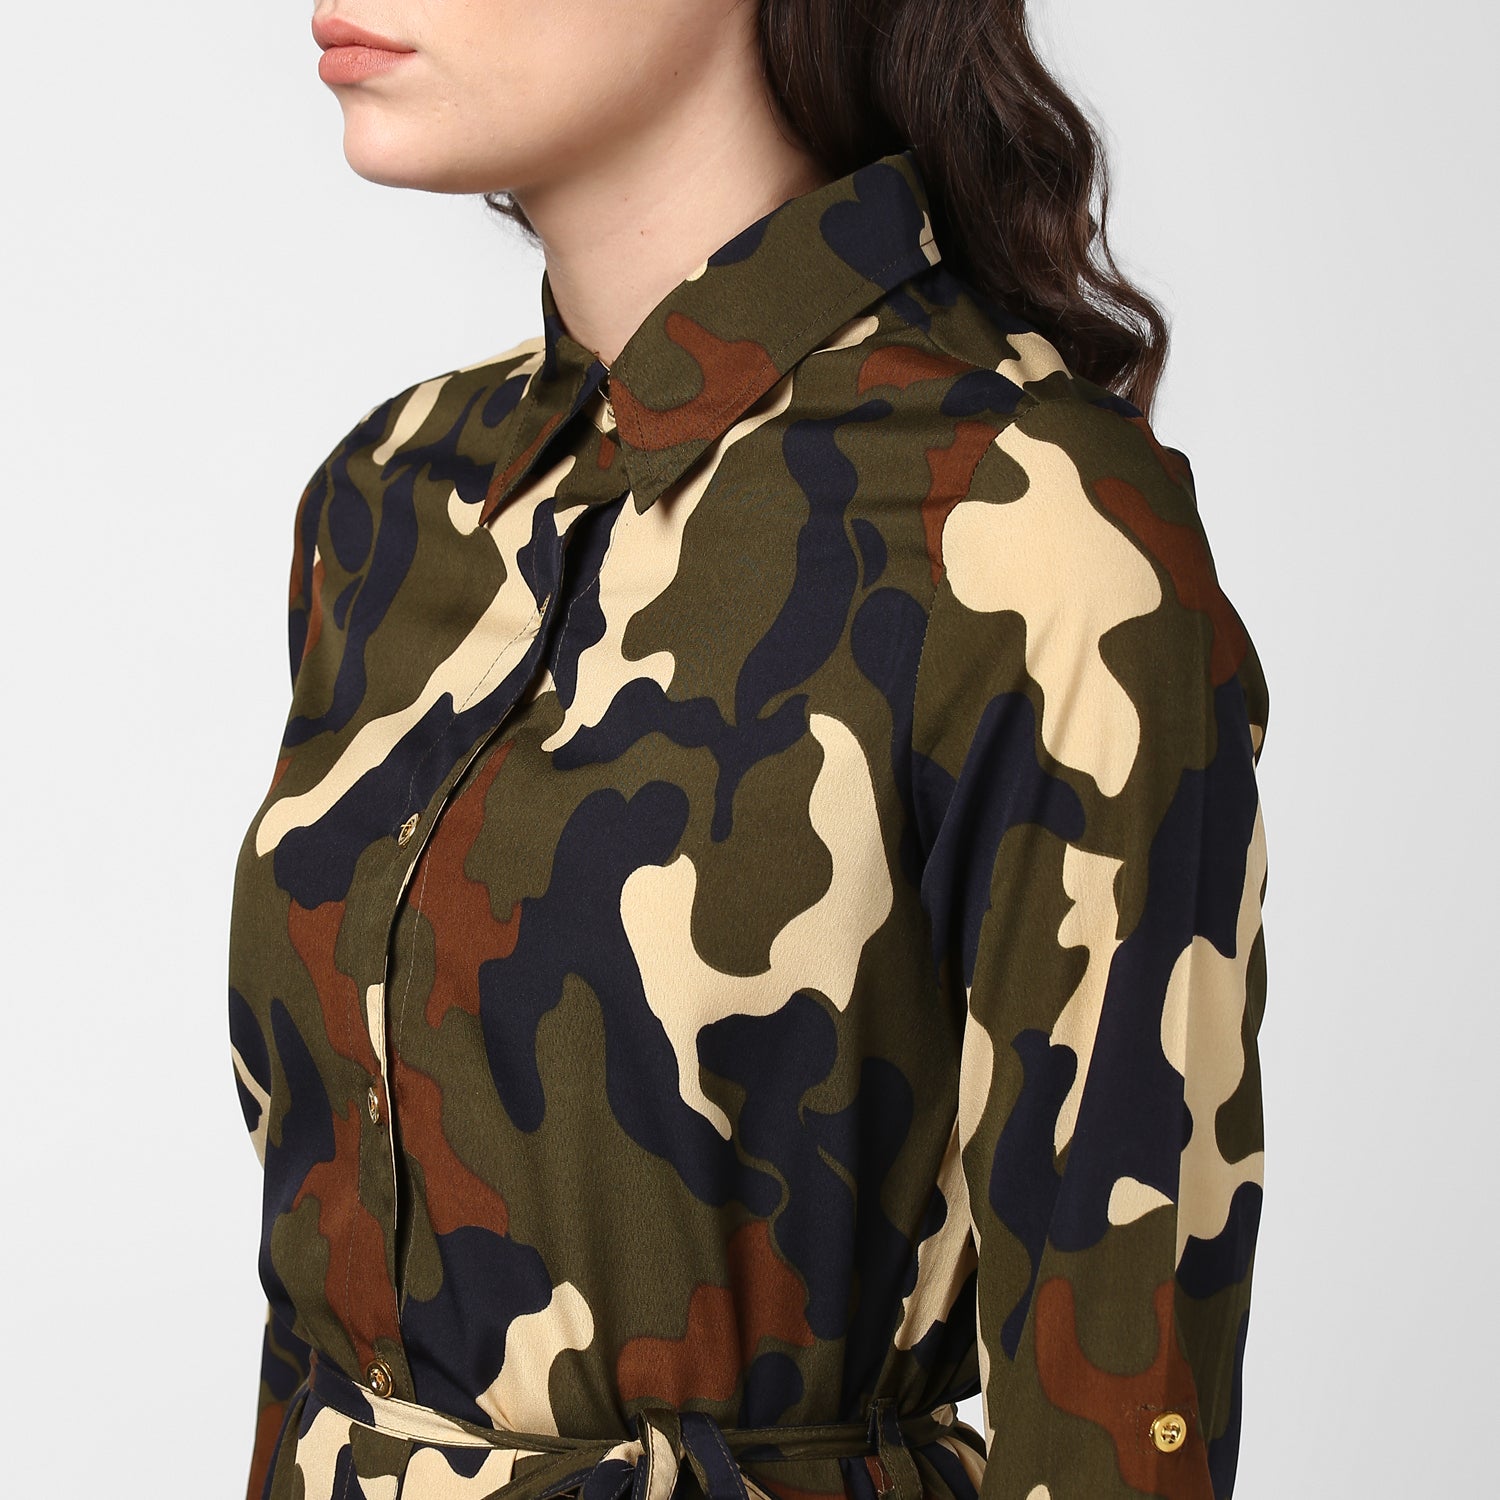 Women's Camouflage Print Shirt Dress - StyleStone